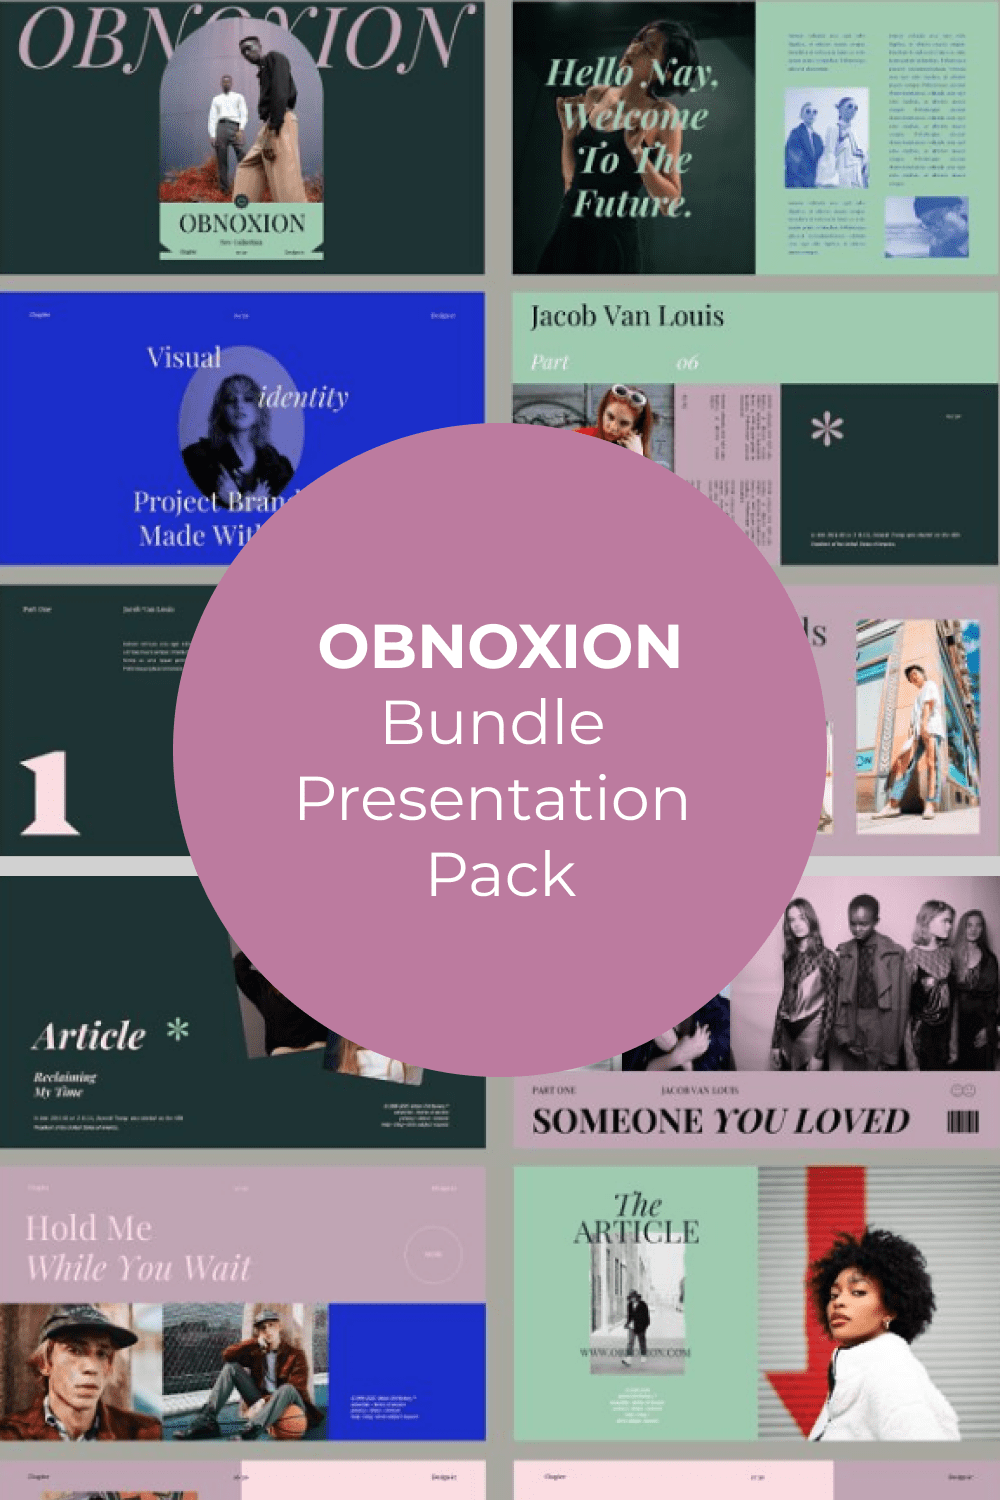 OBNOXION-Bundle Presentation Pack Pinterest.